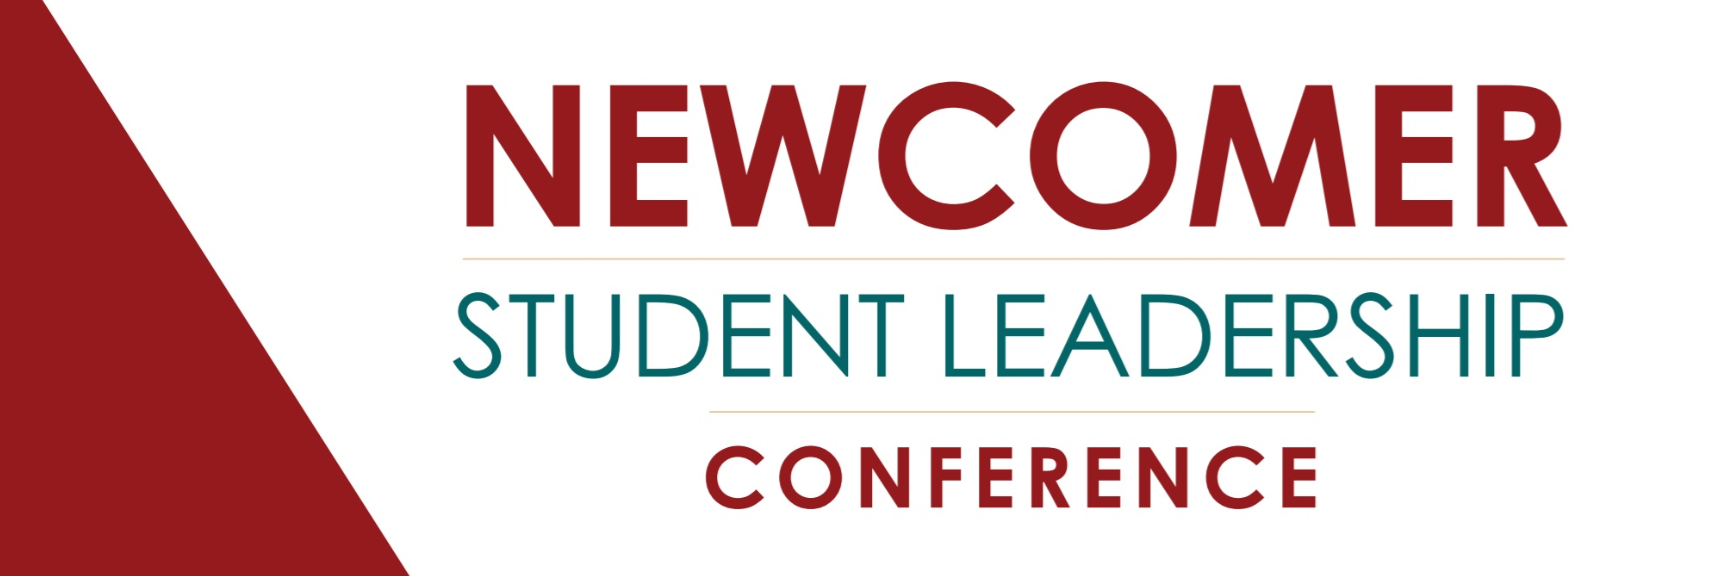 Header Newcomer Student Leadership Conference 2019